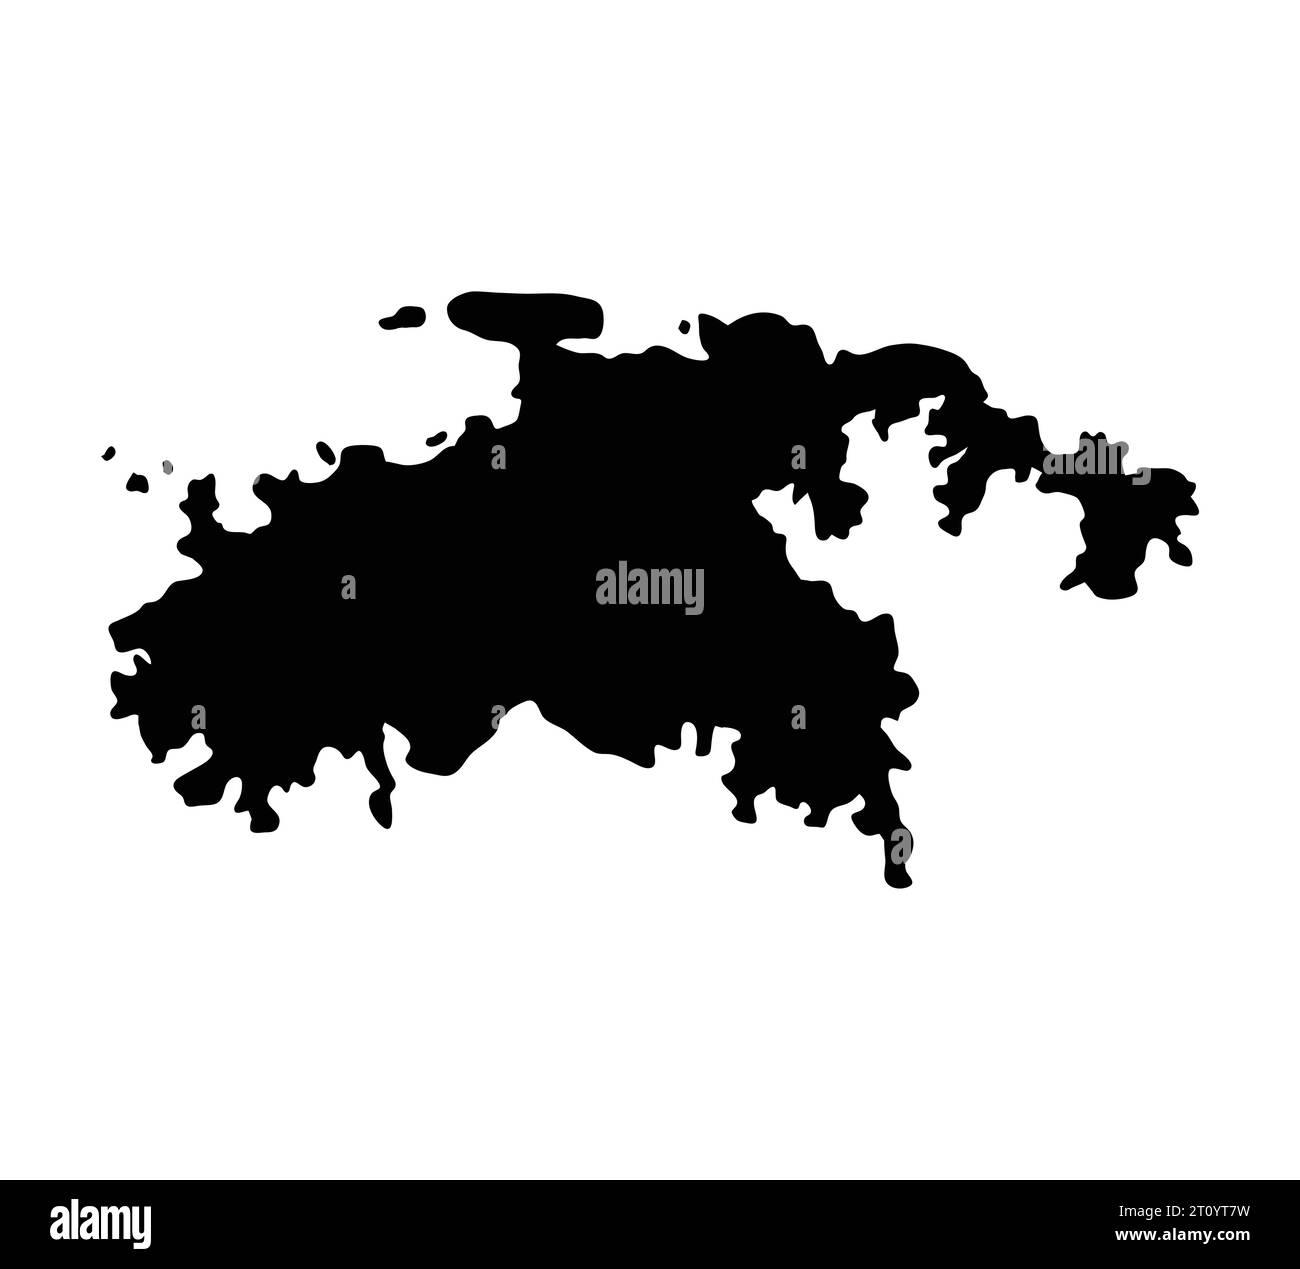 St john island map silhouette region territory, black shape style illustration Stock Vector